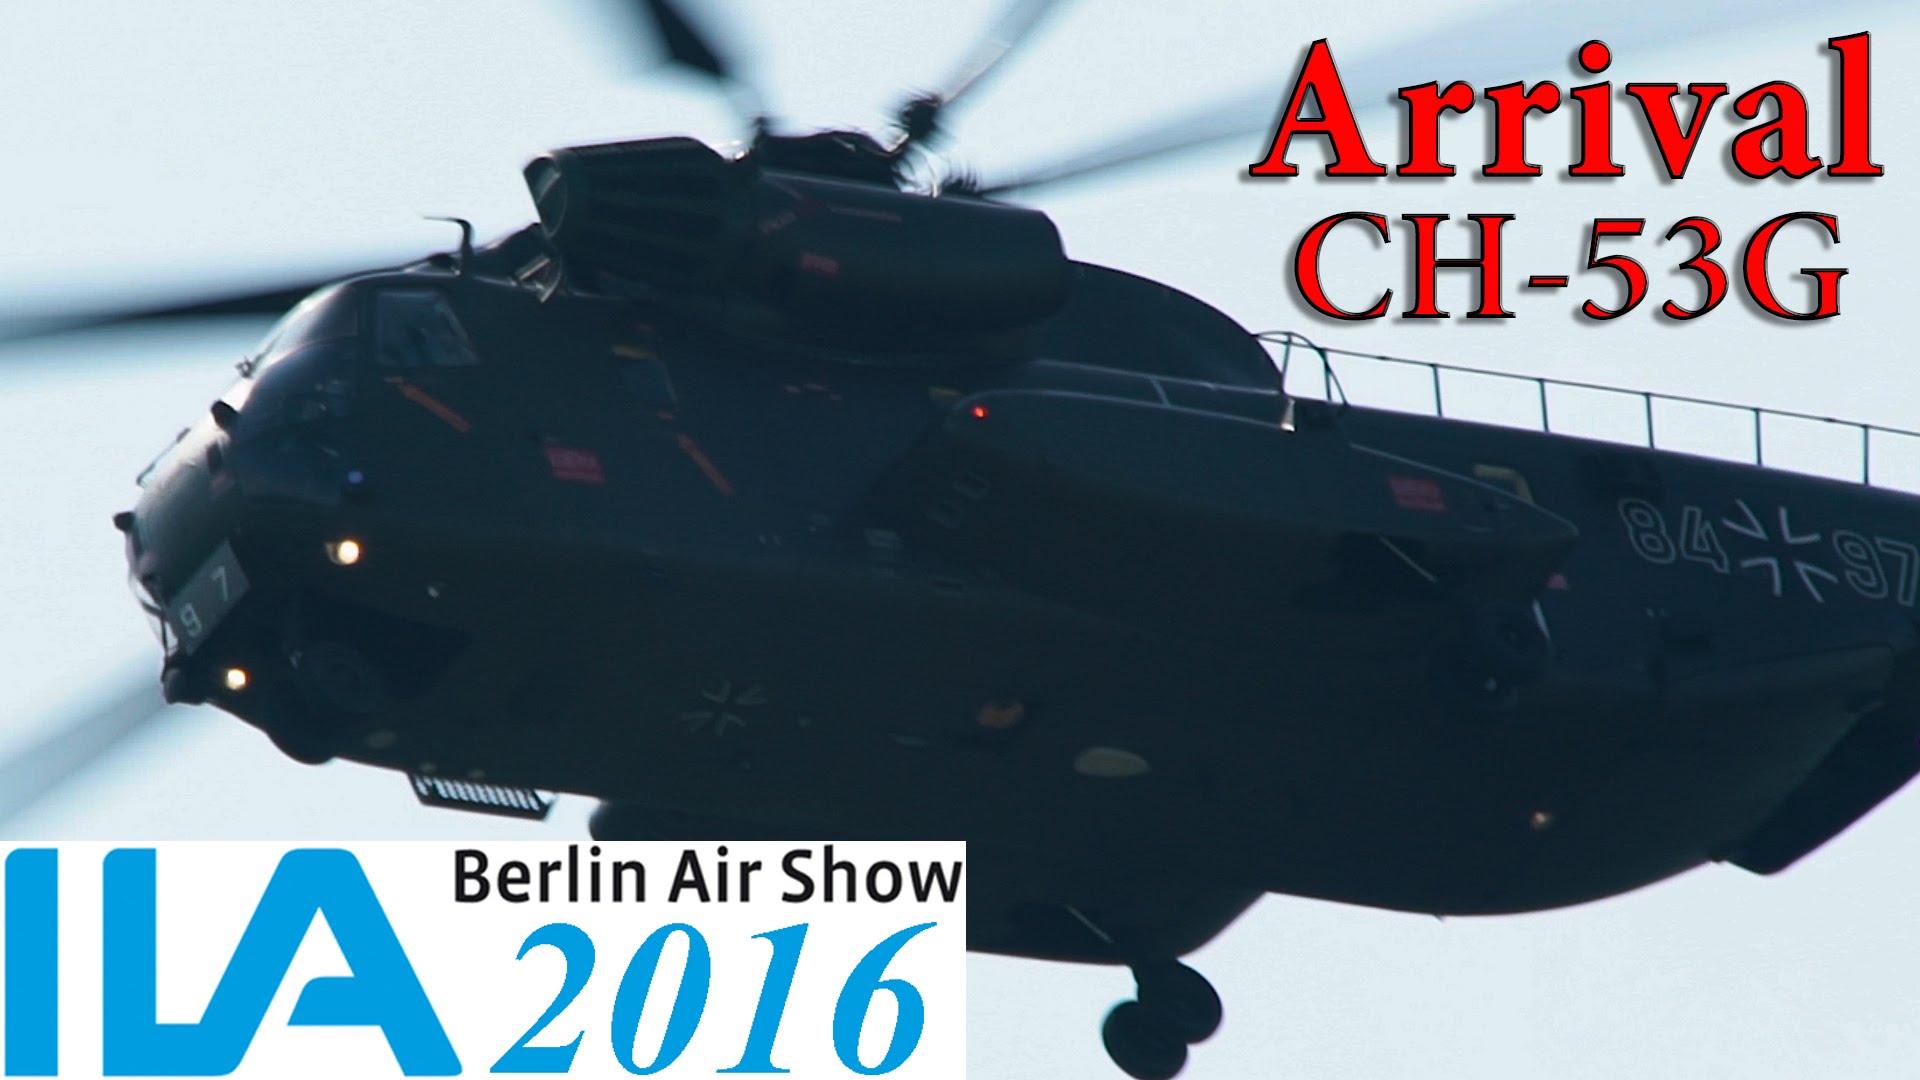 ILA 2016│German Air Force CH-53G│Arrival